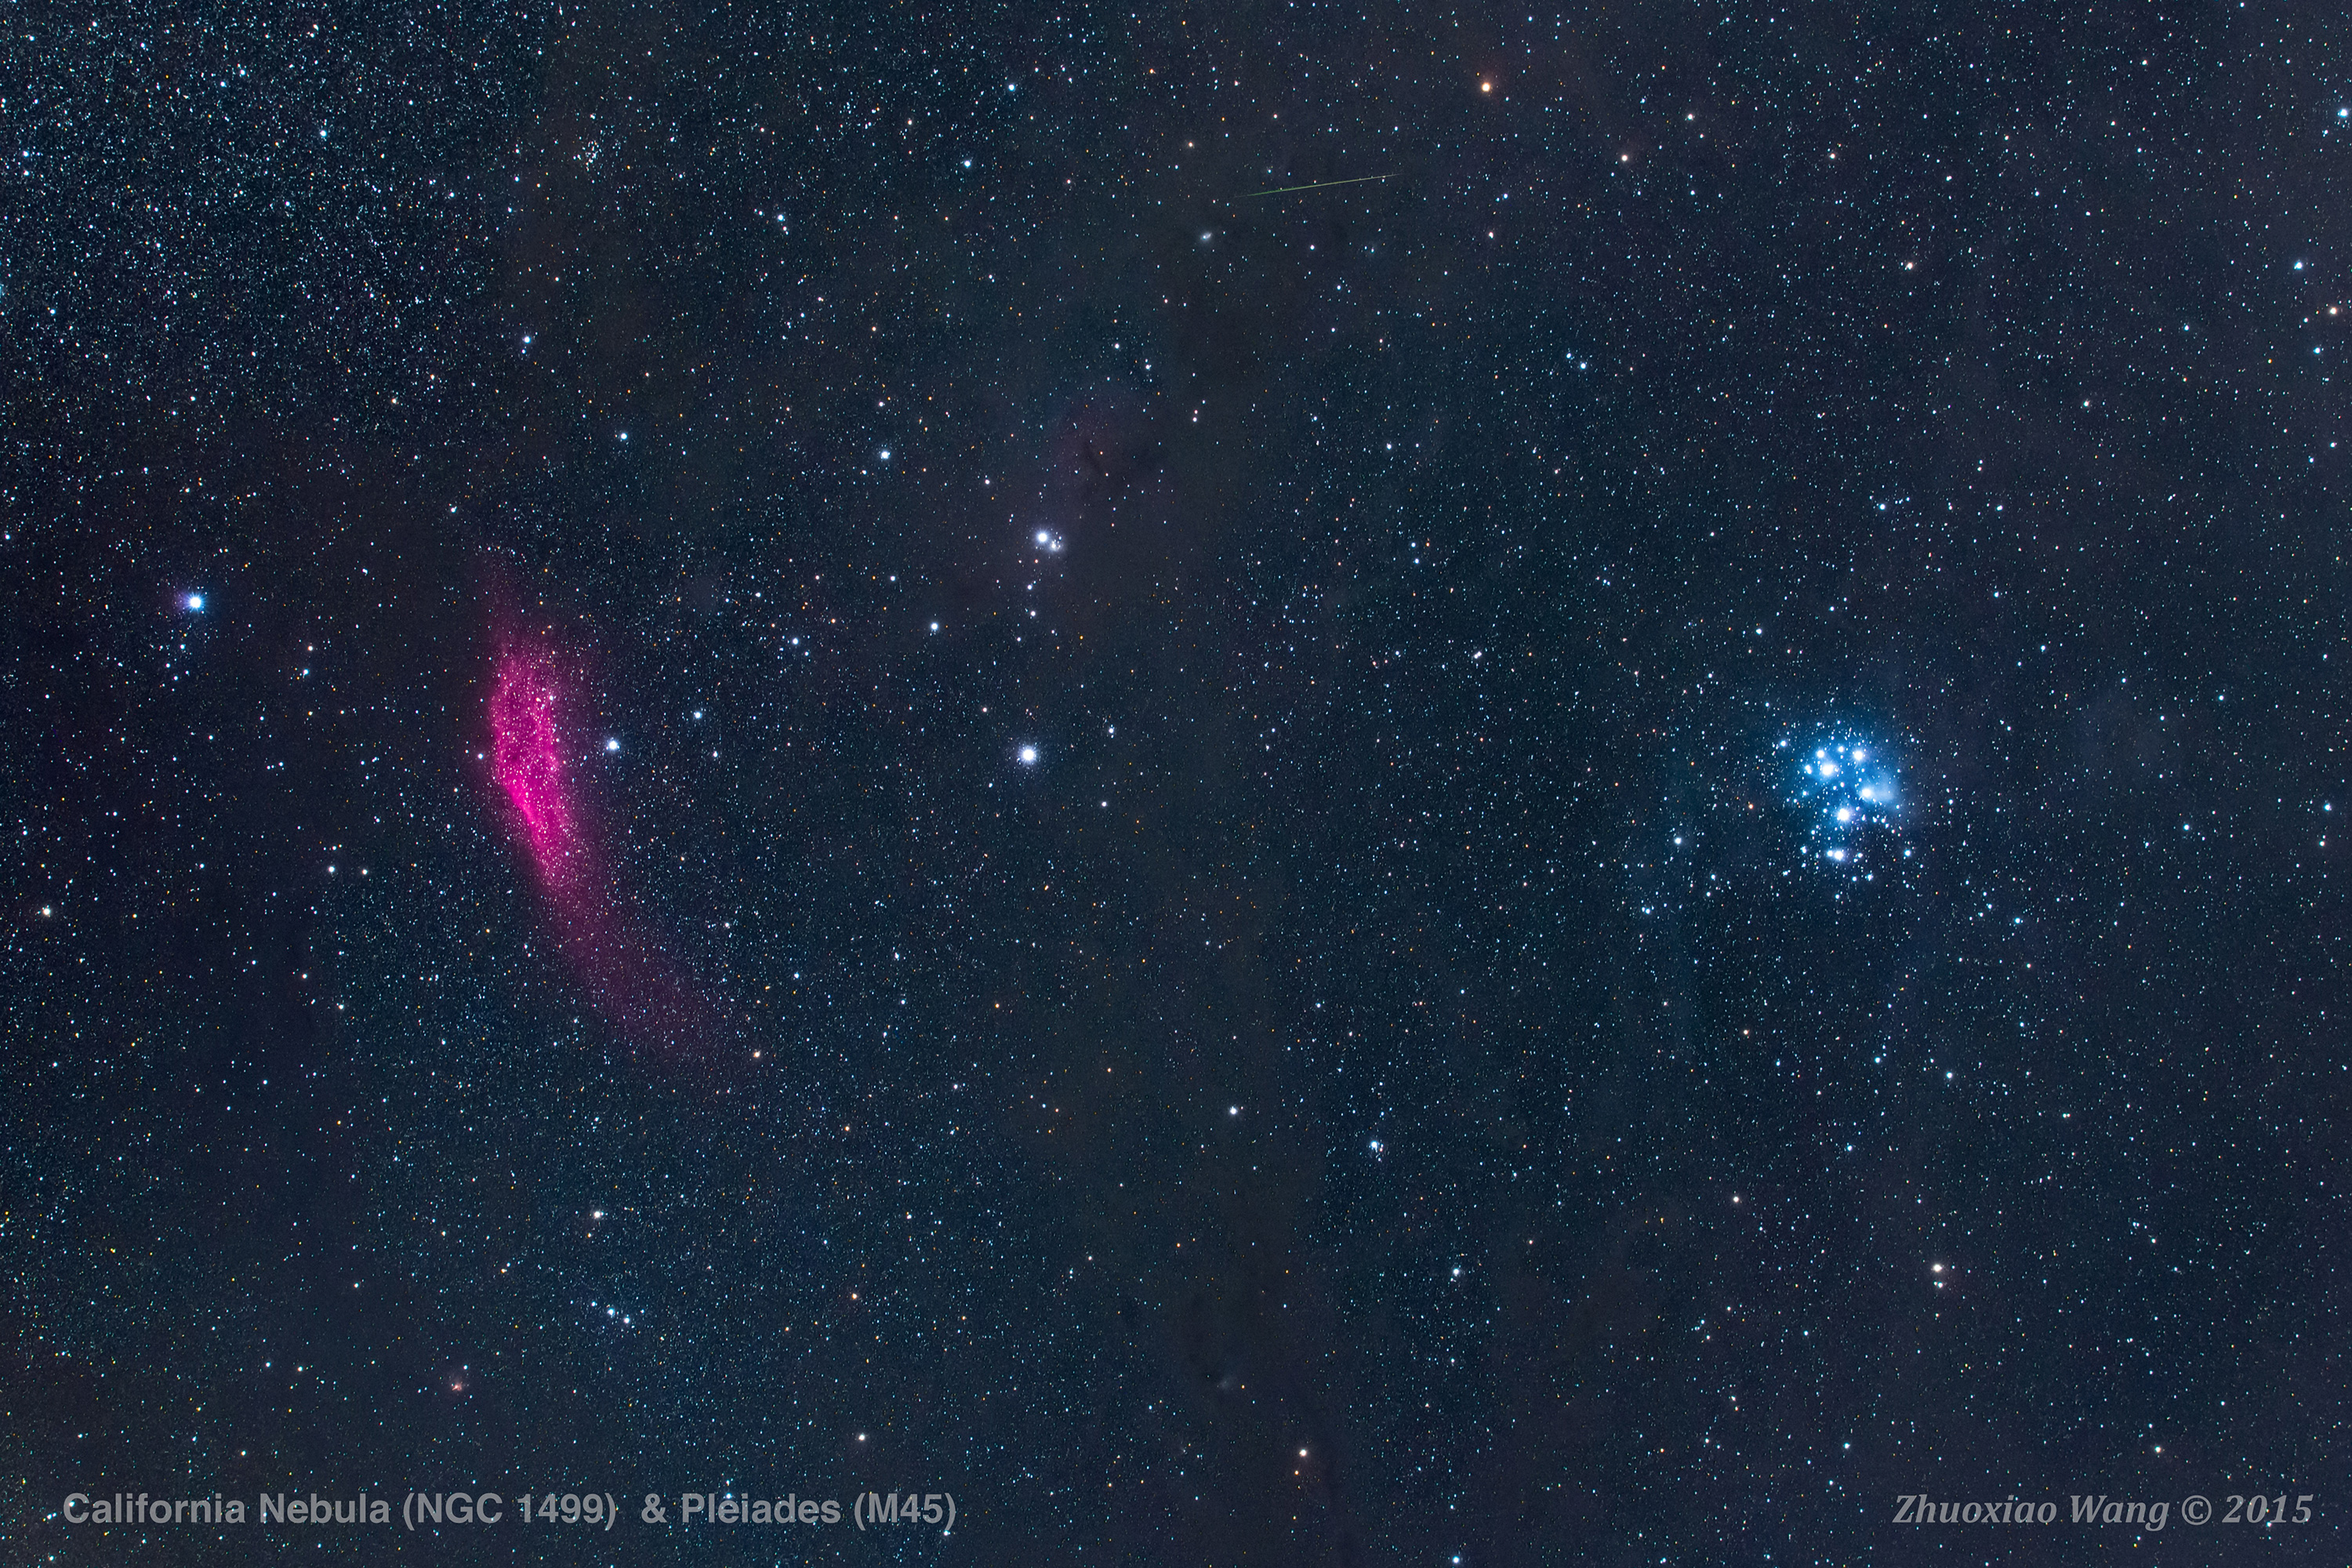 NGC2239图片